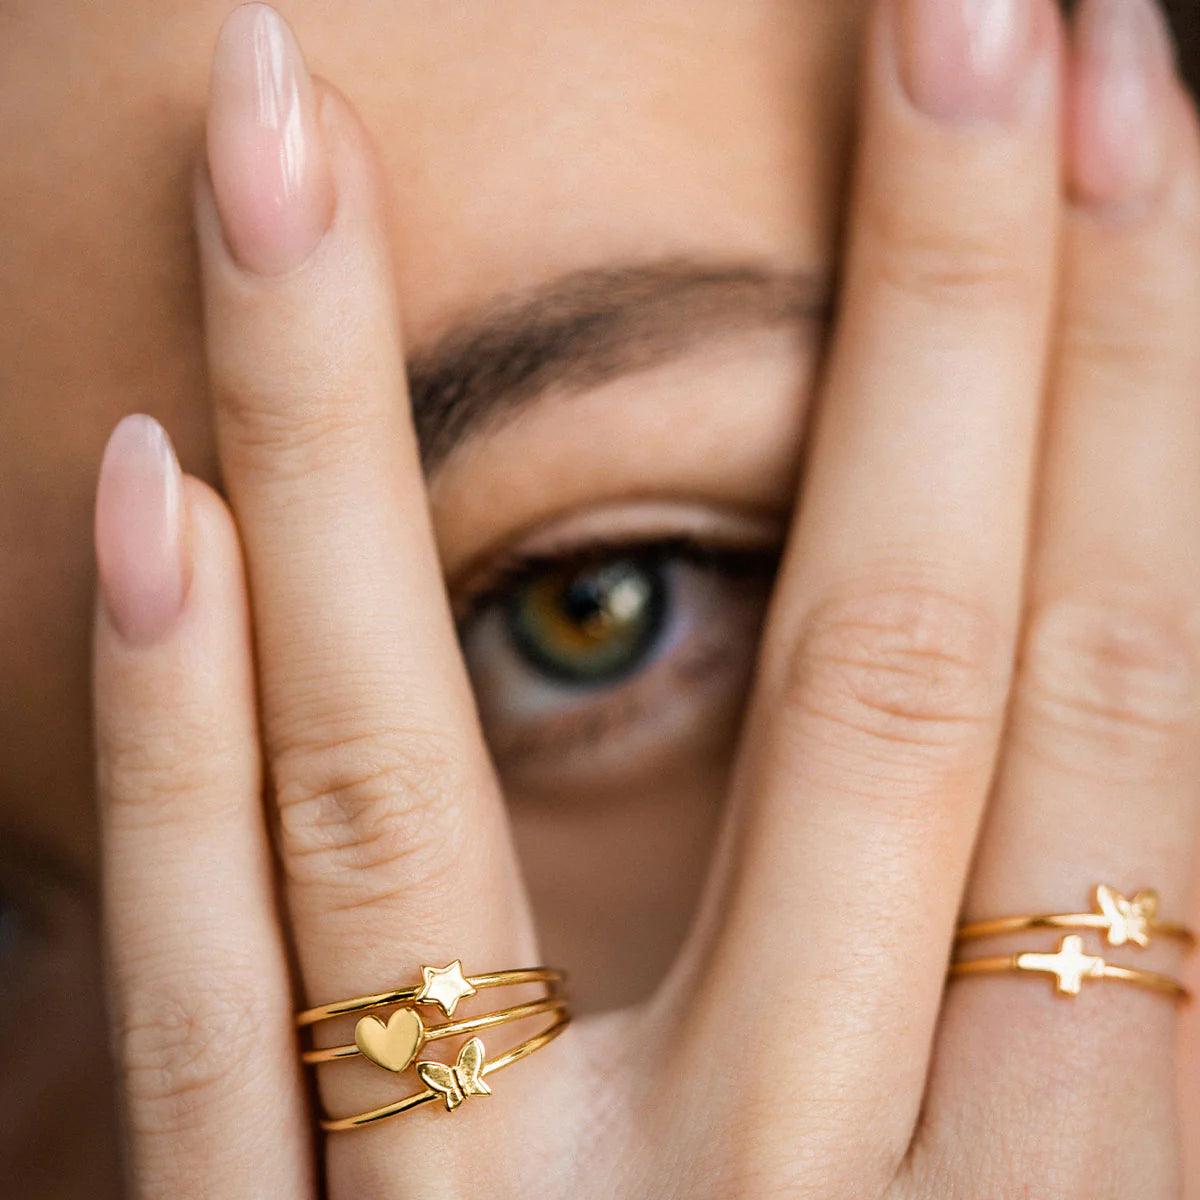 18kt Gold Heart Ring - Moregola Fine Jewelry